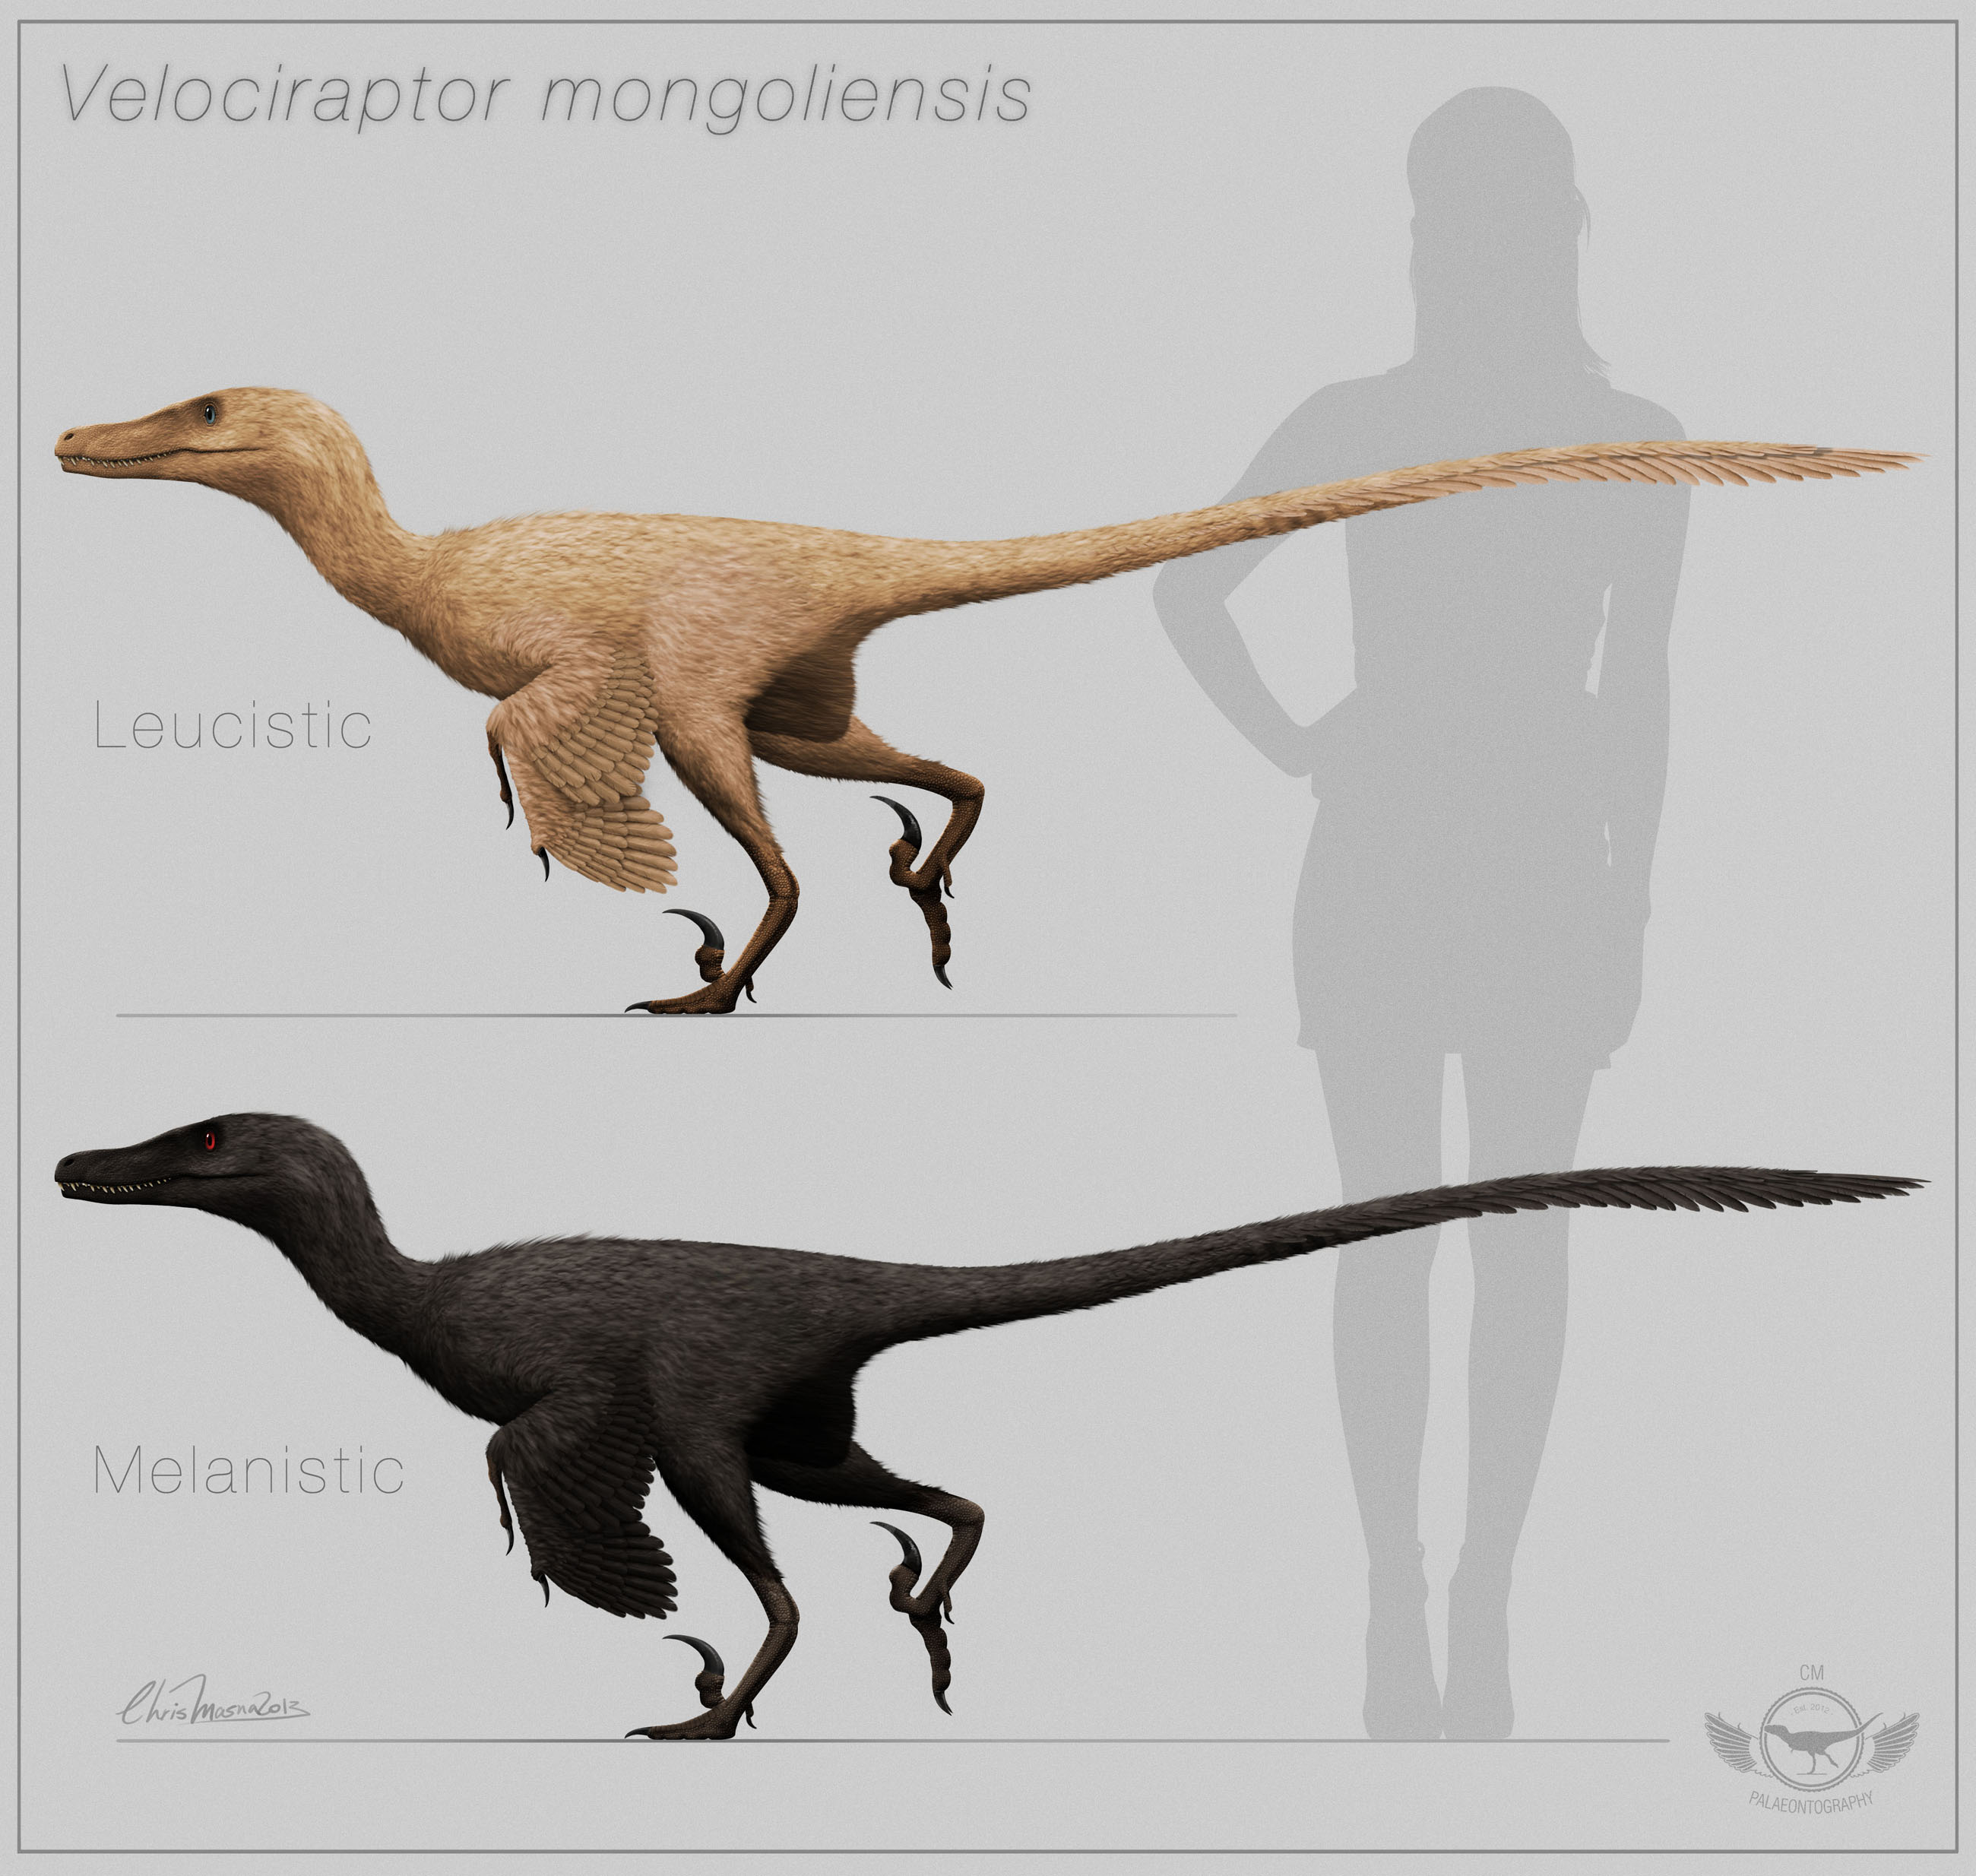 velociraptor_mongoliensis___color_variation_by_chrismasna-d5tyuj9.jpg